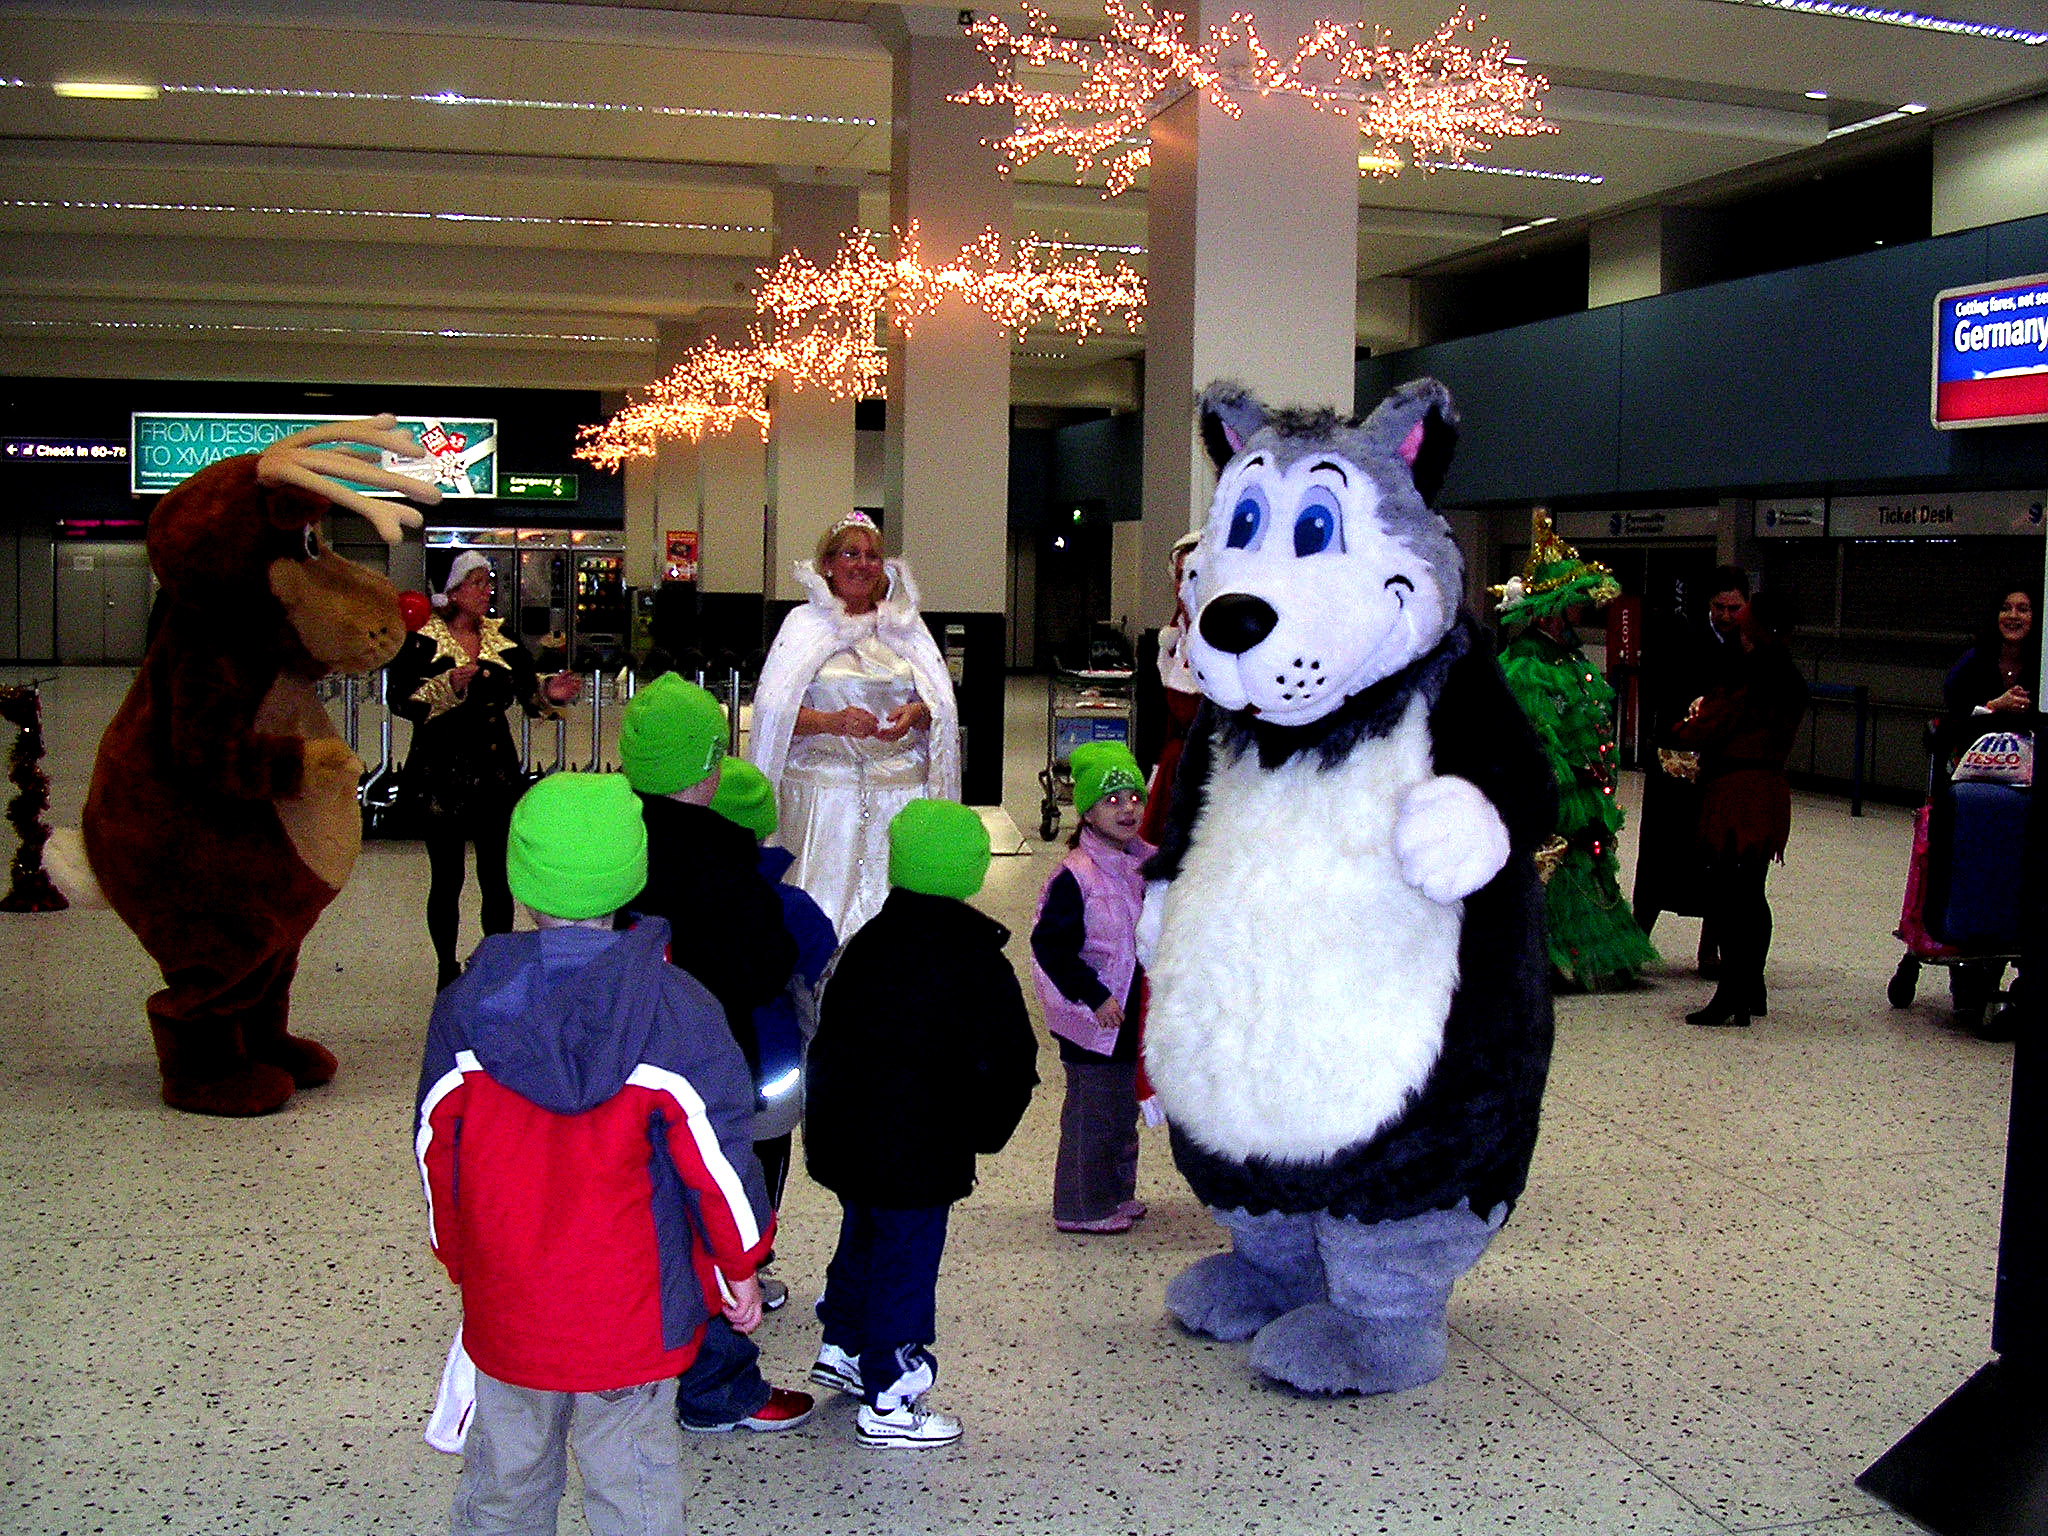 children walking through an airport wearing costume